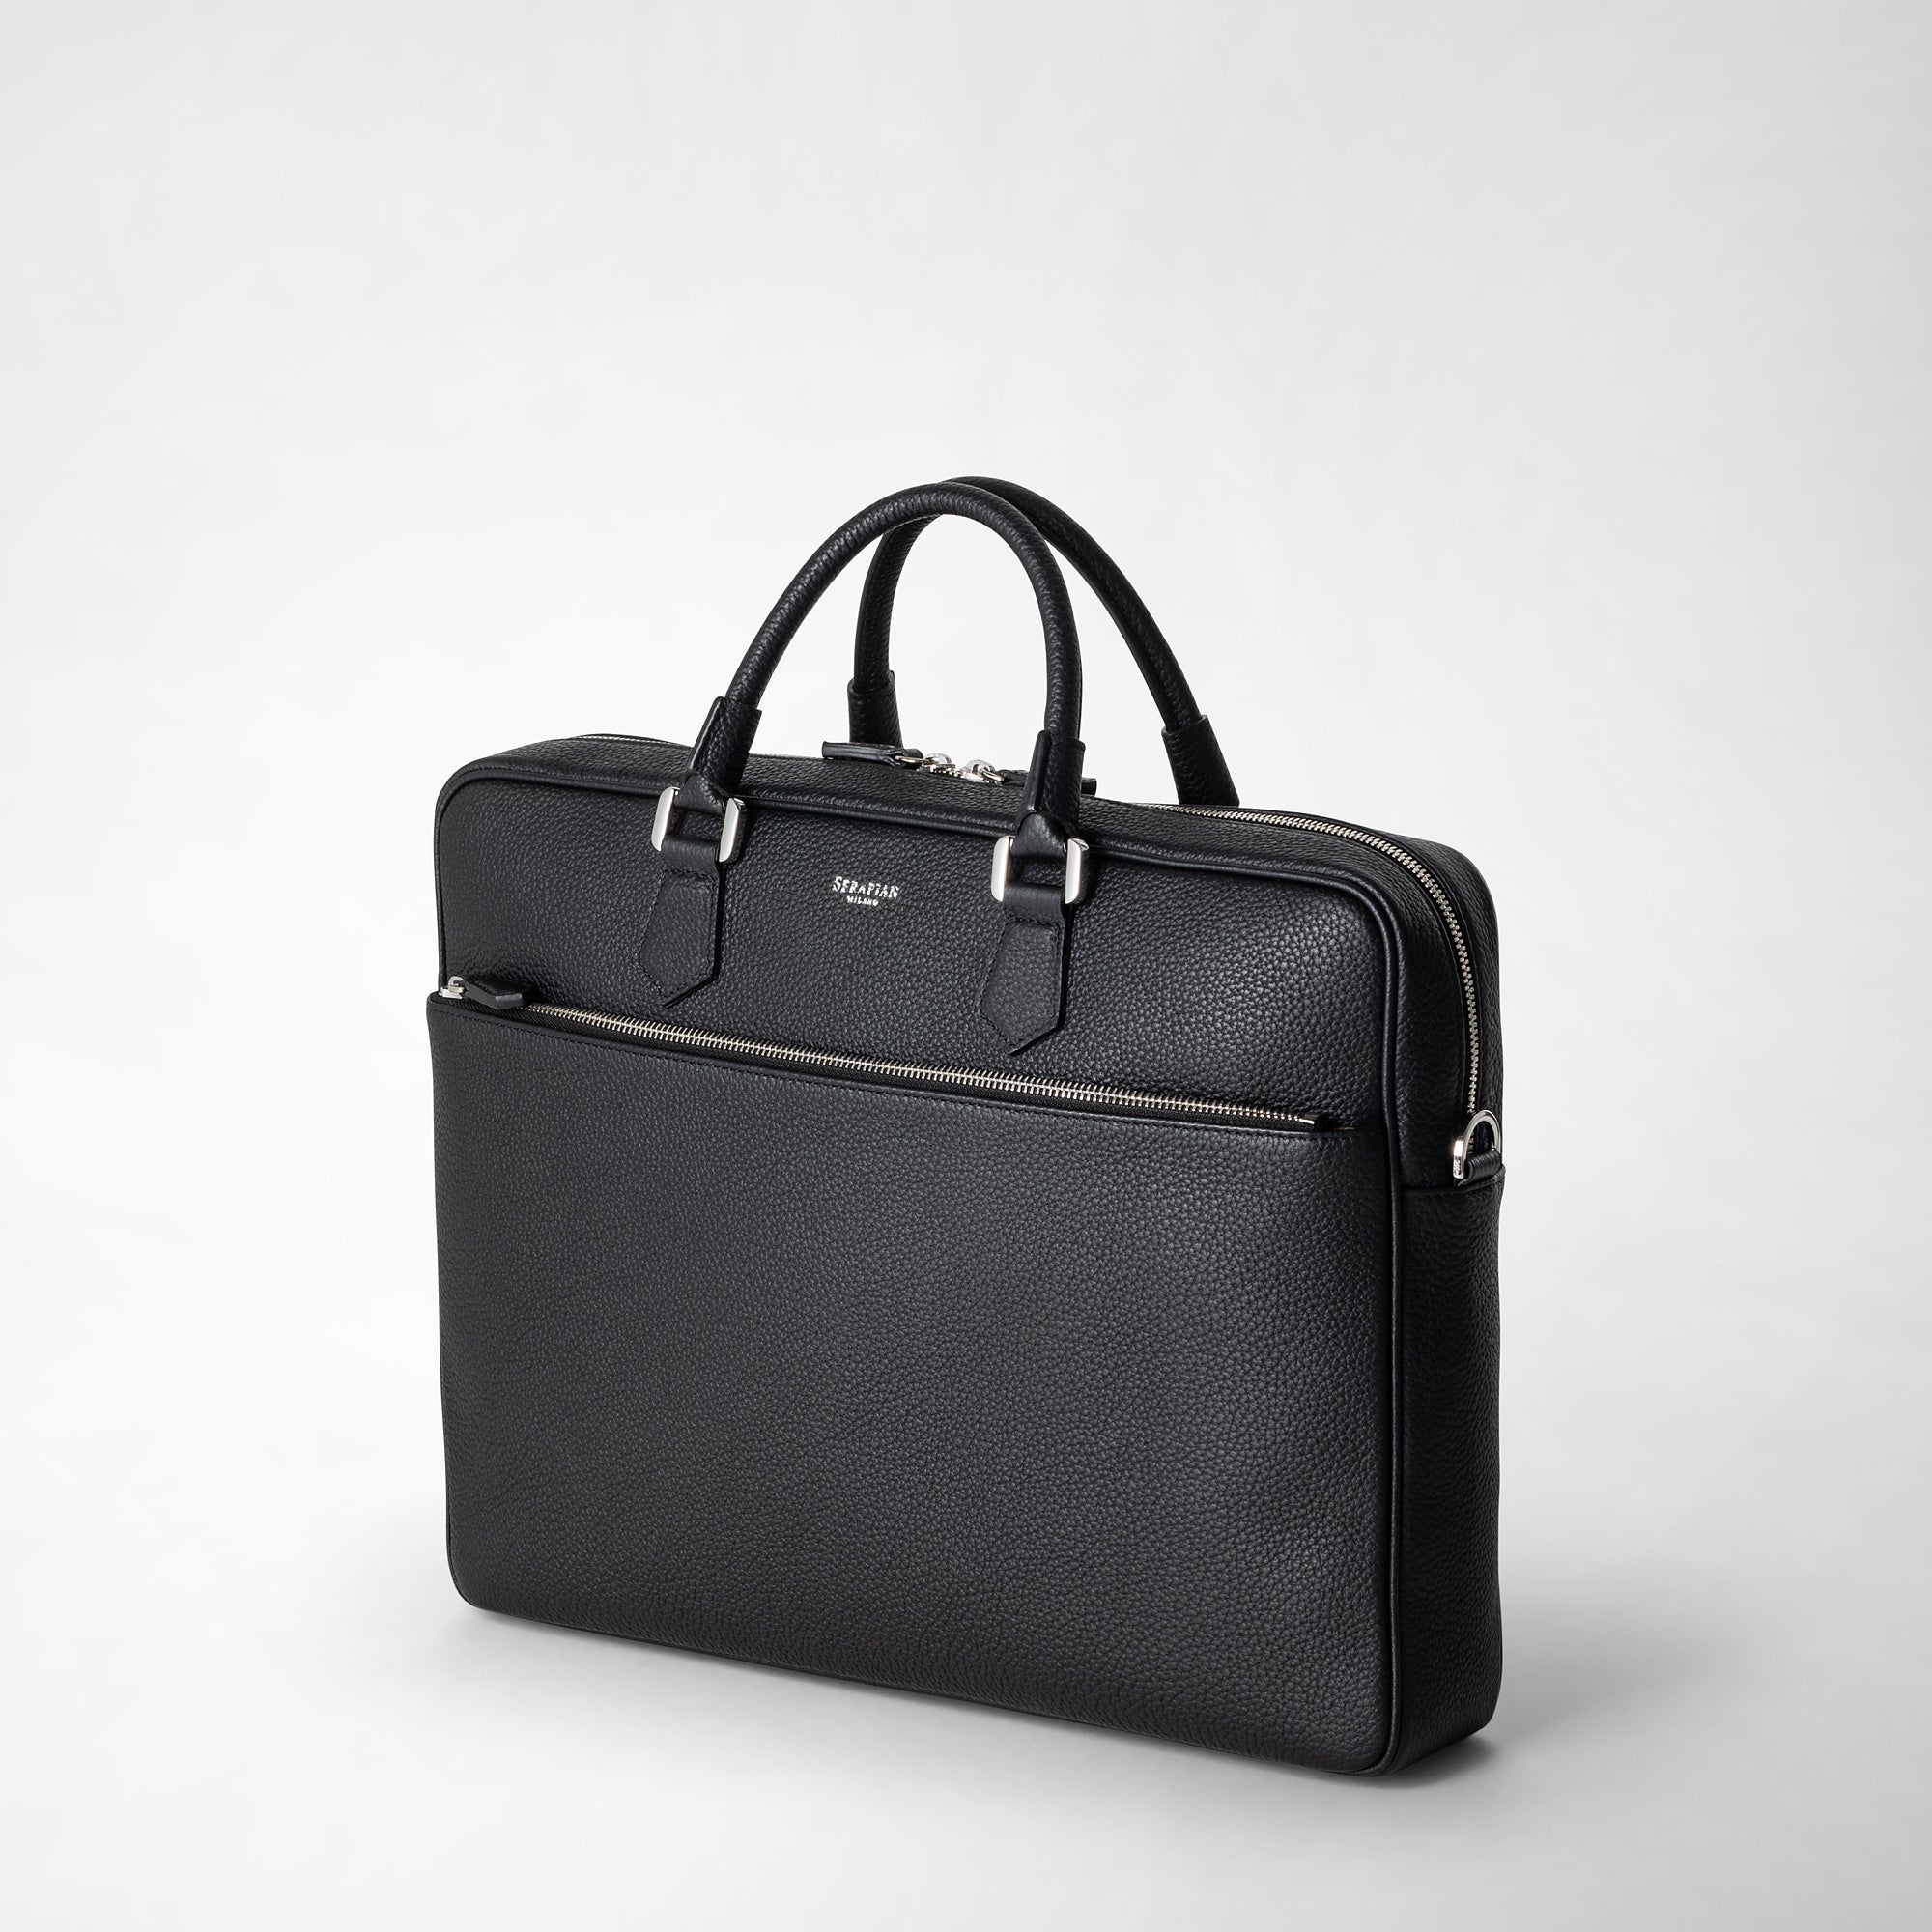 Slim briefcase in cachemire leather leather black – Serapian 